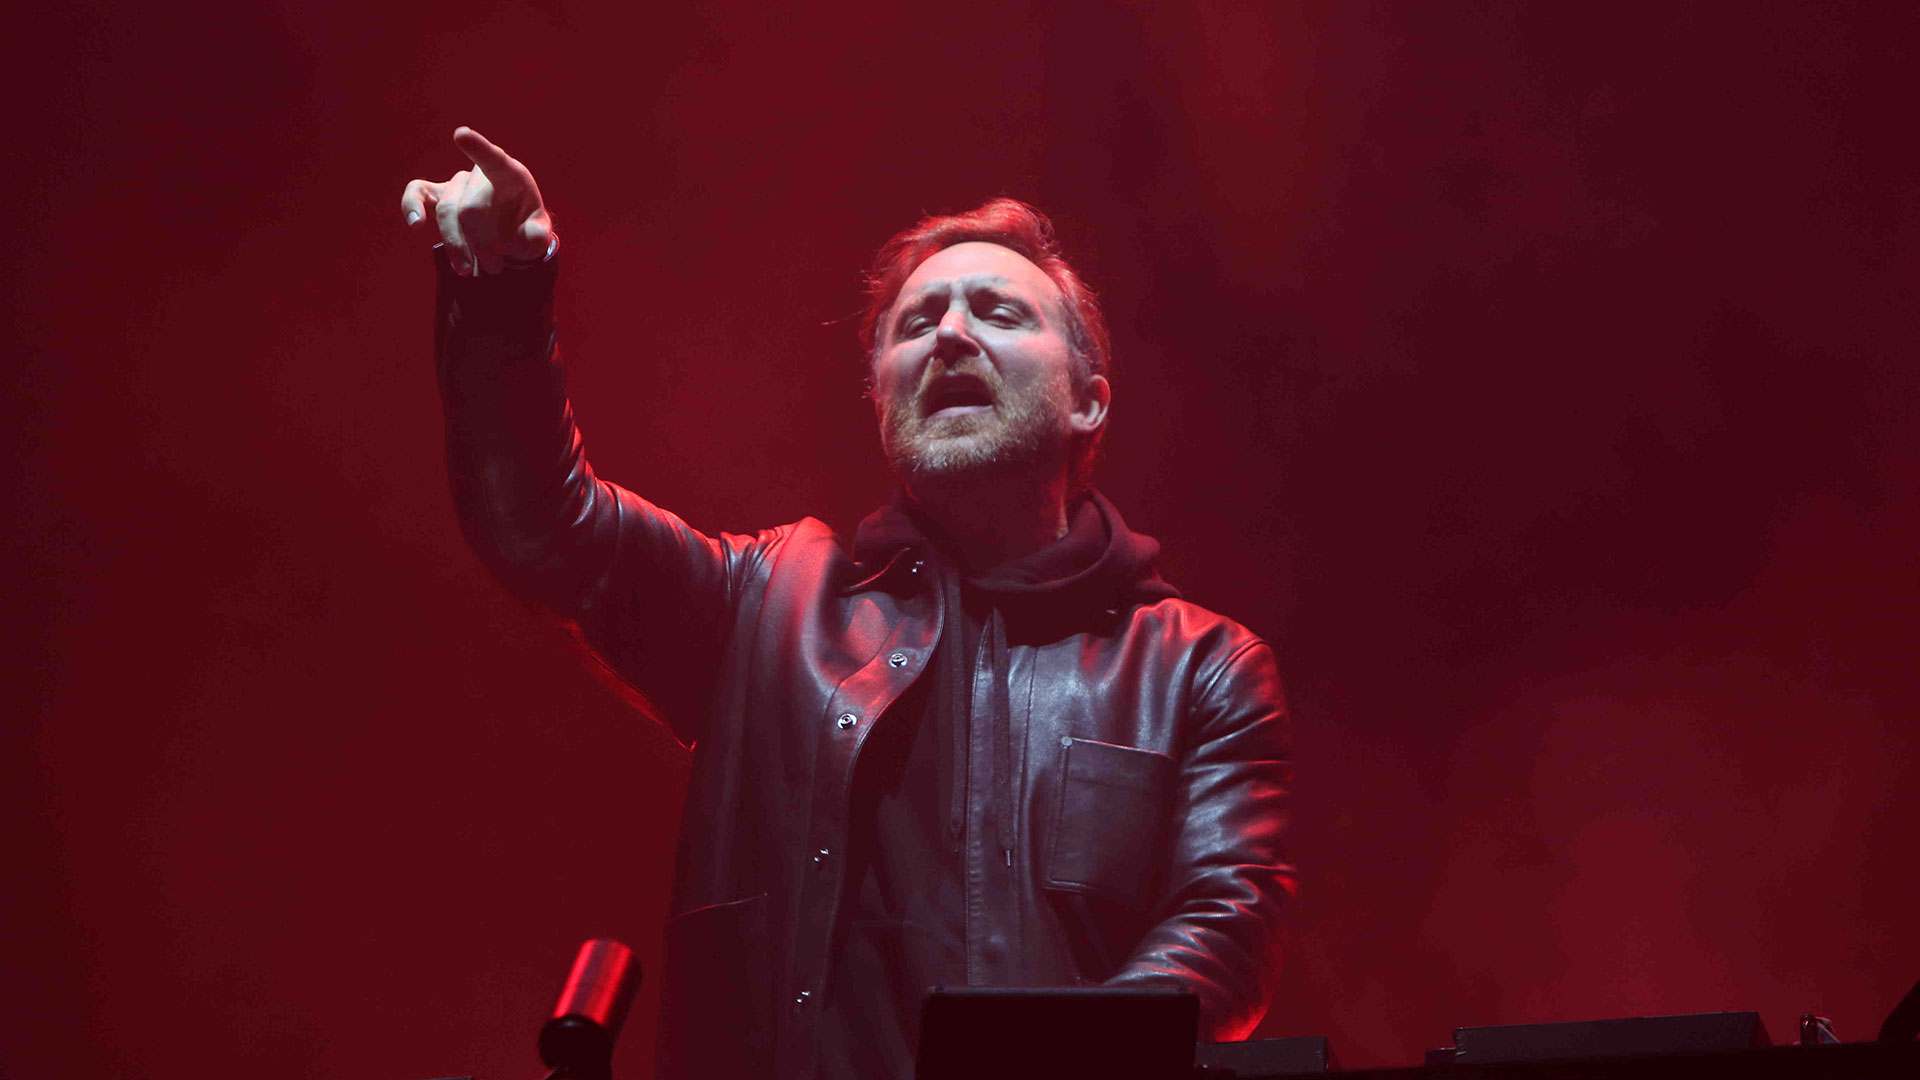 David Guetta llega al Ultra Music Festival para hacer vibrar a miles de fans con su espectacular show en vivo